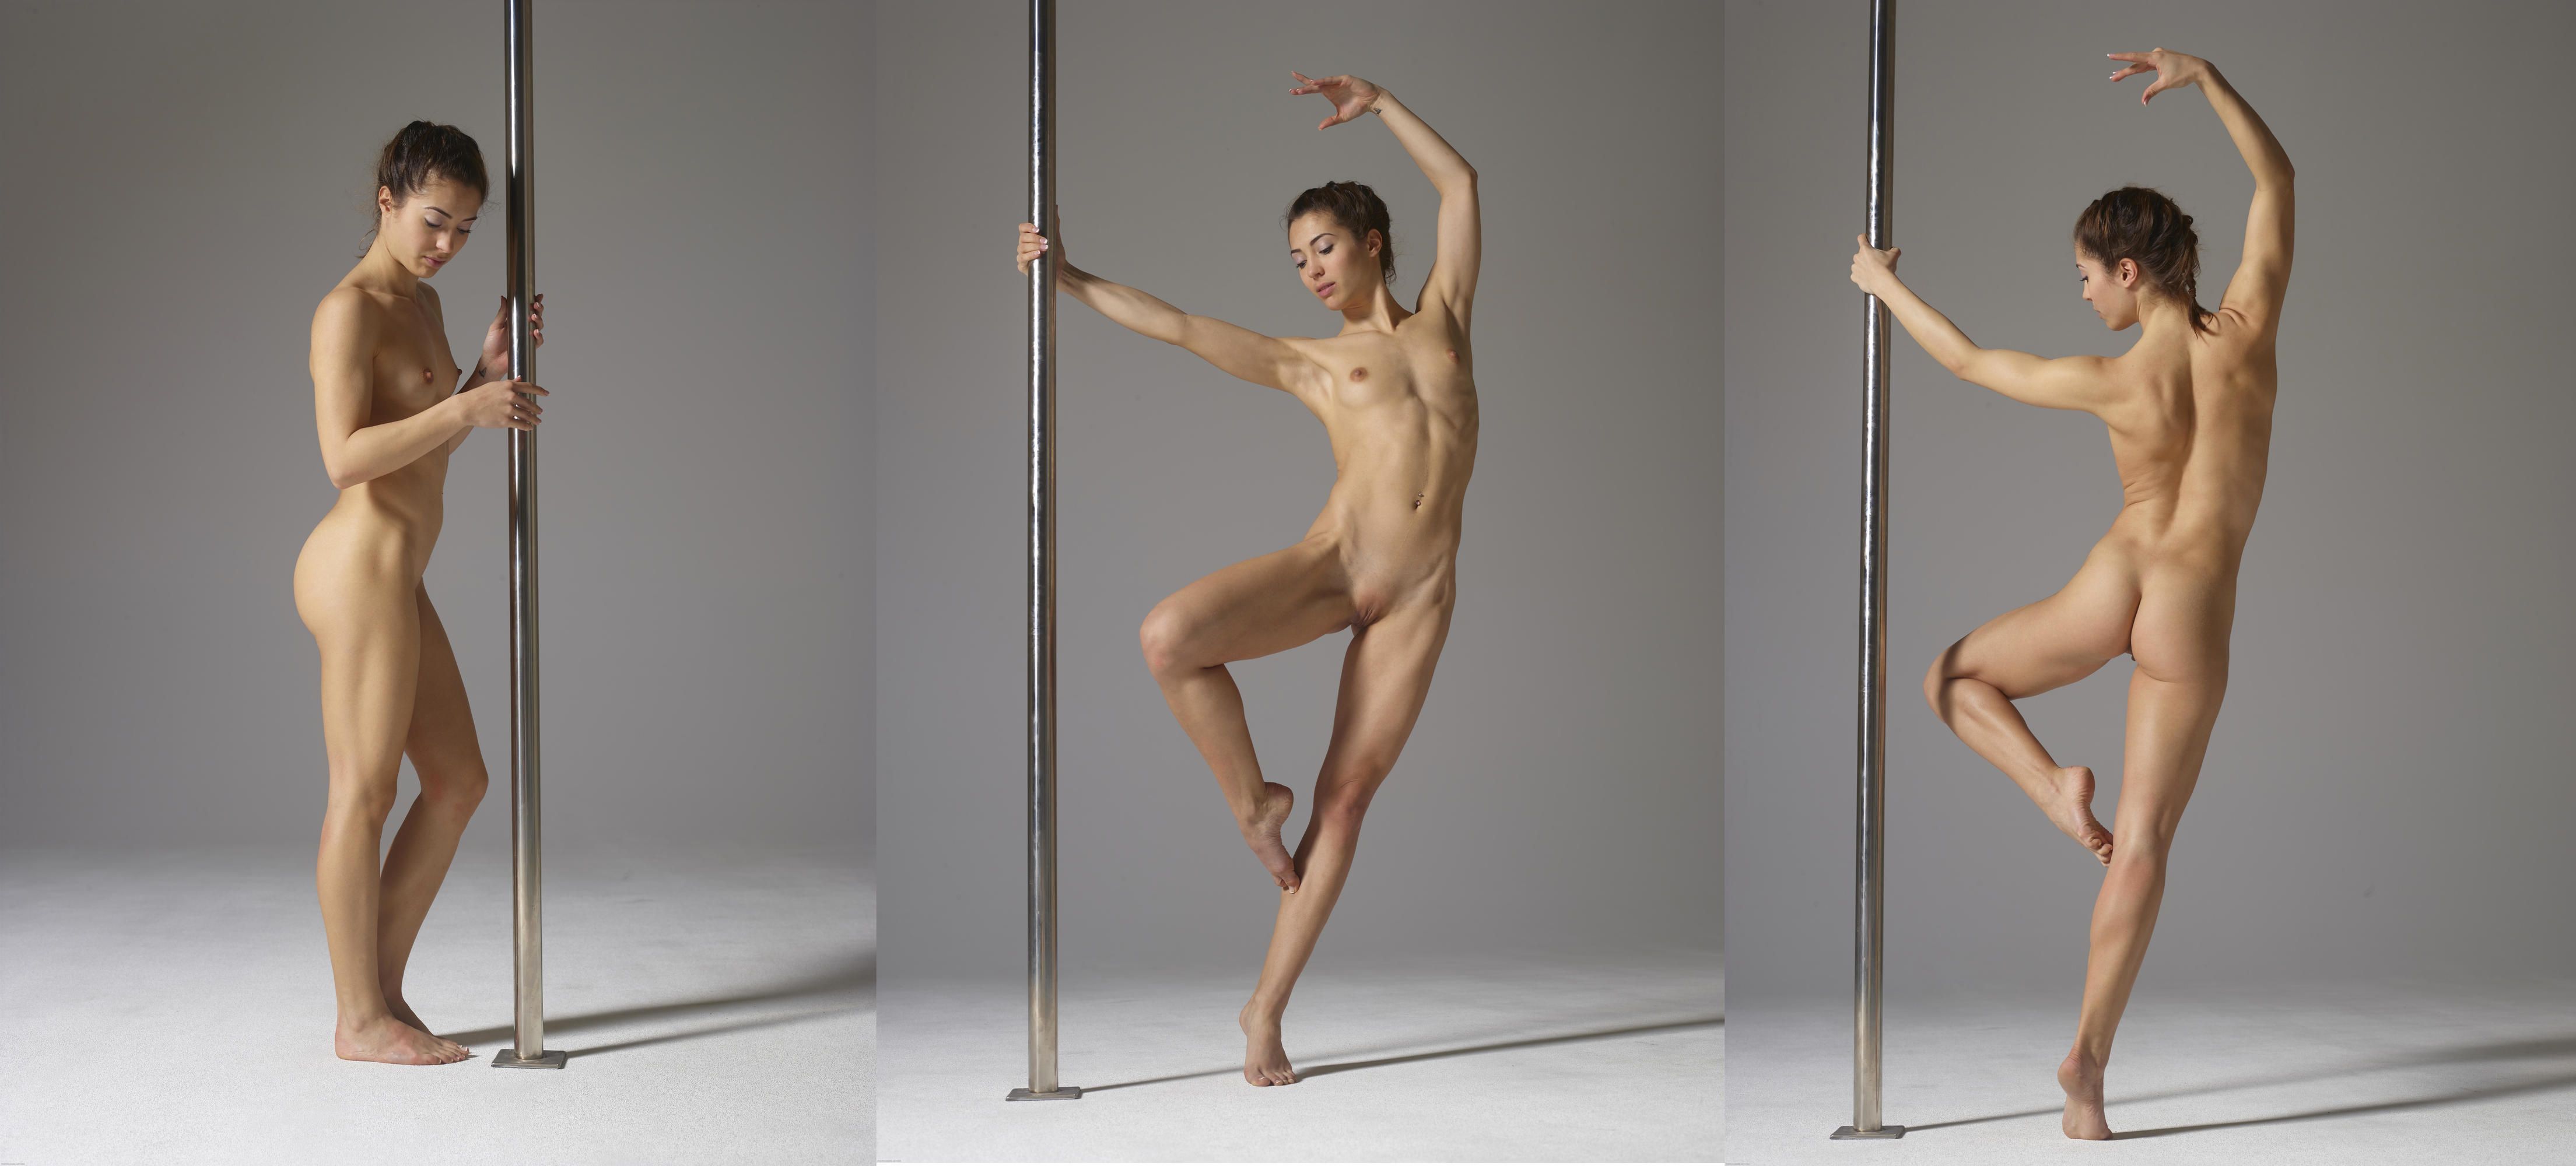 Dance girls pole dancing naked